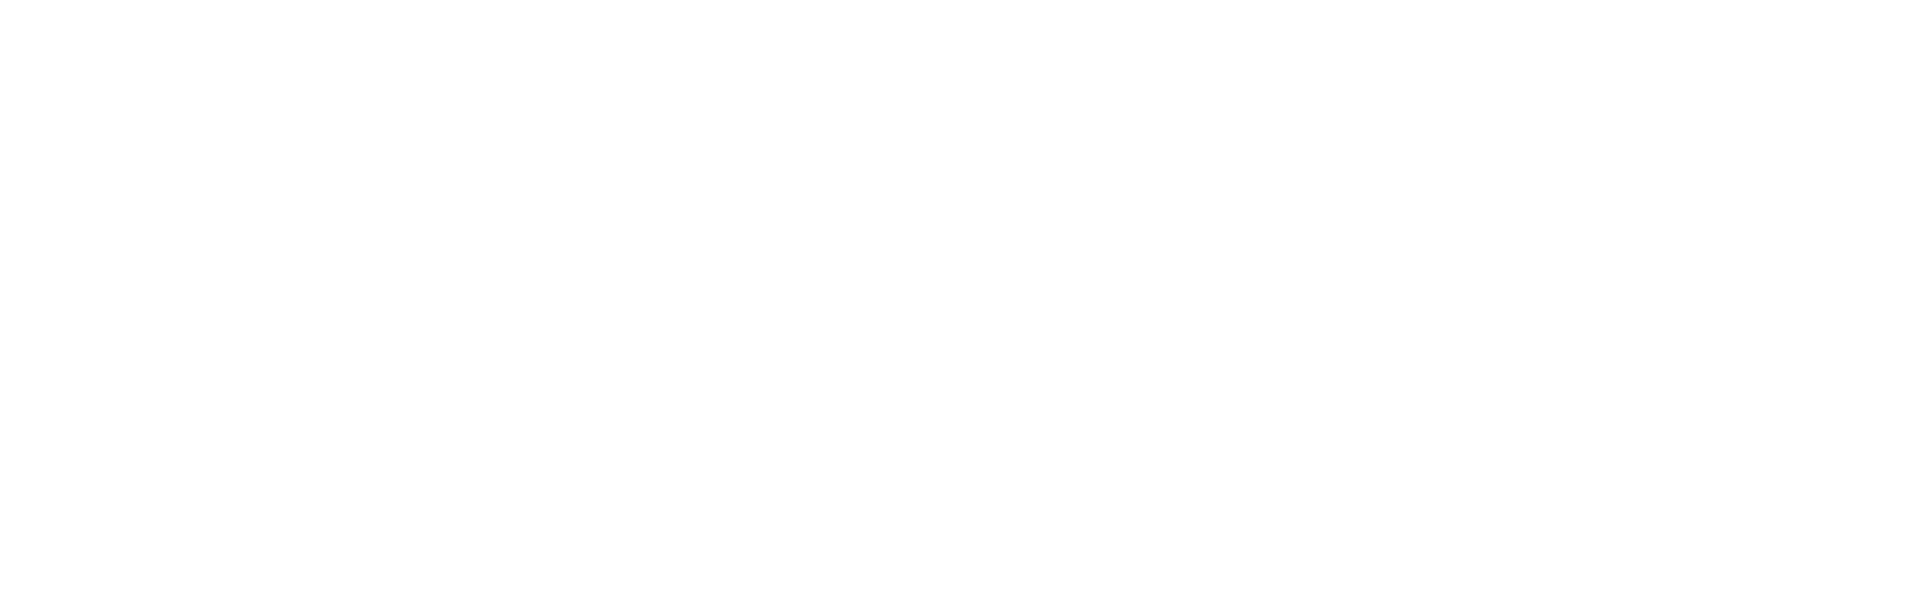 Black Box Logo - RSS News Feeds | Black Box Corporation